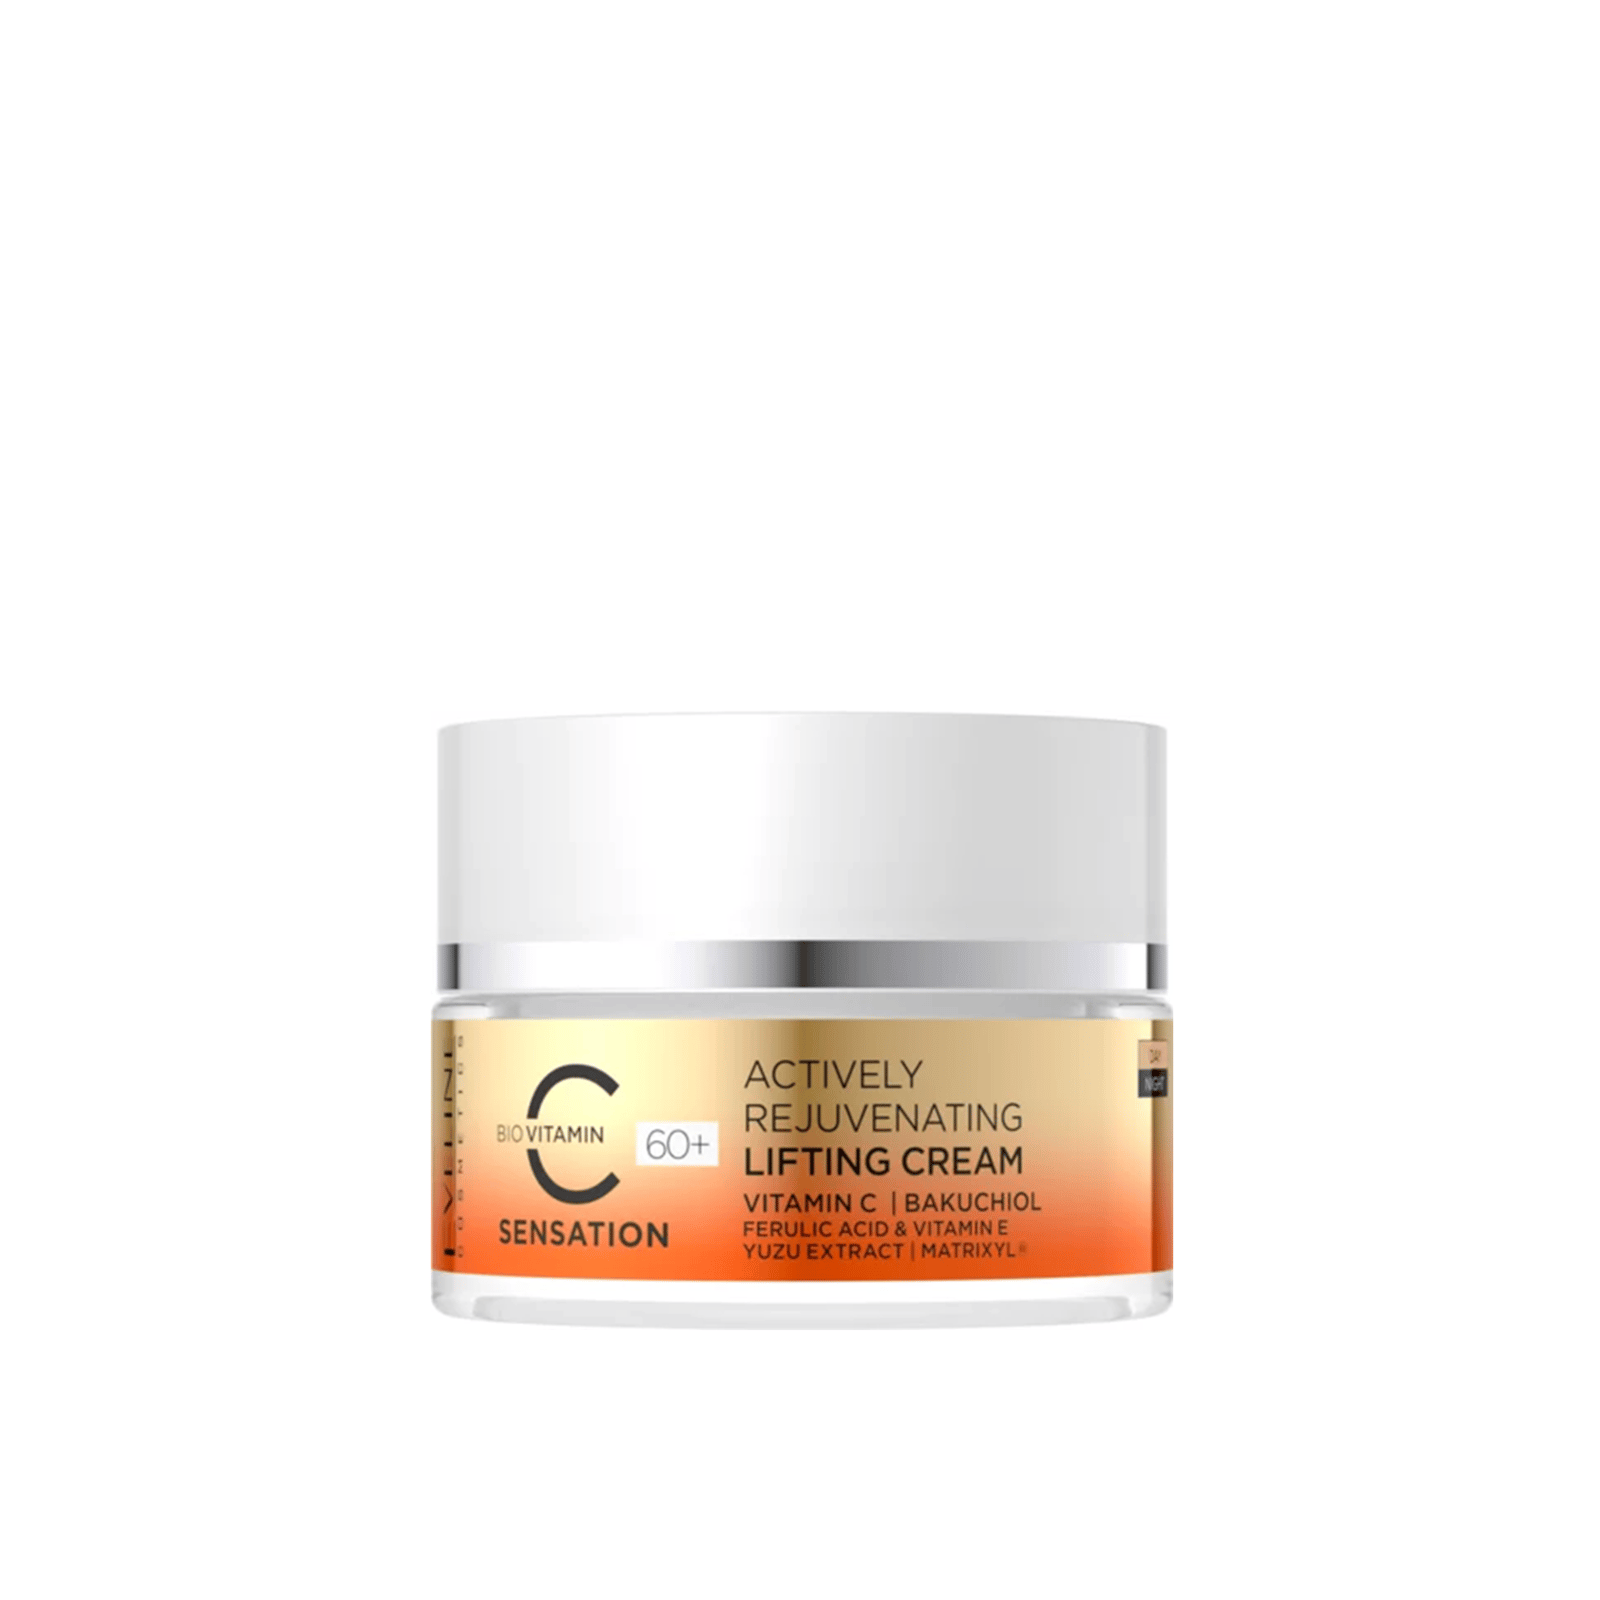 Eveline Cosmetics Bio Vitamin C Sensation 60+ Actively Rejuvenating Cream 50ml (1.76 fl oz)